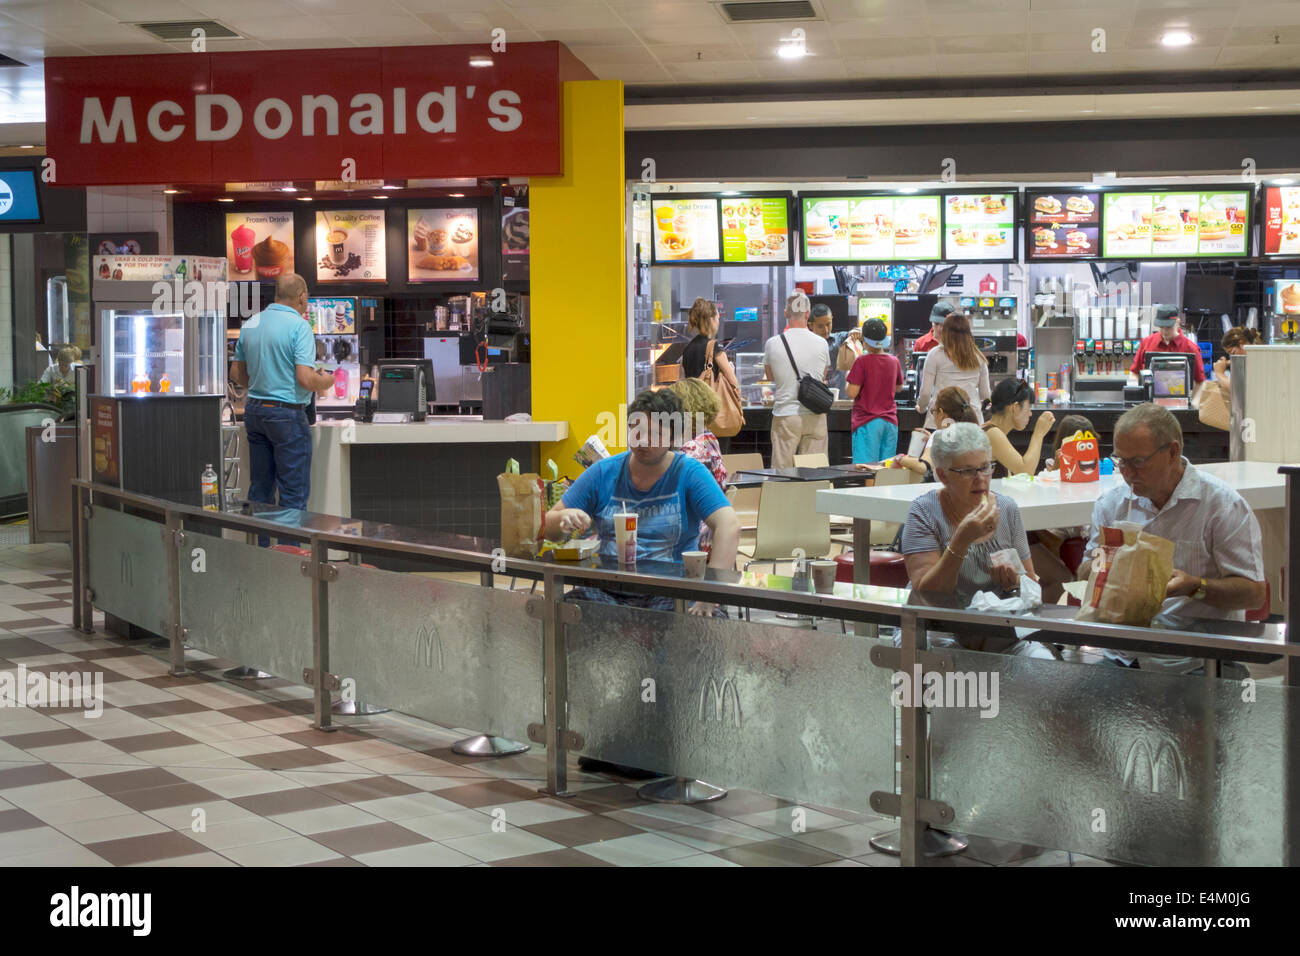 Brisbane Australia CBD,Central Station,McDonald's,burgers,hamburgers,restaurant restaurants food dining cafe cafes,fast food,AU140317004 Stock Photo